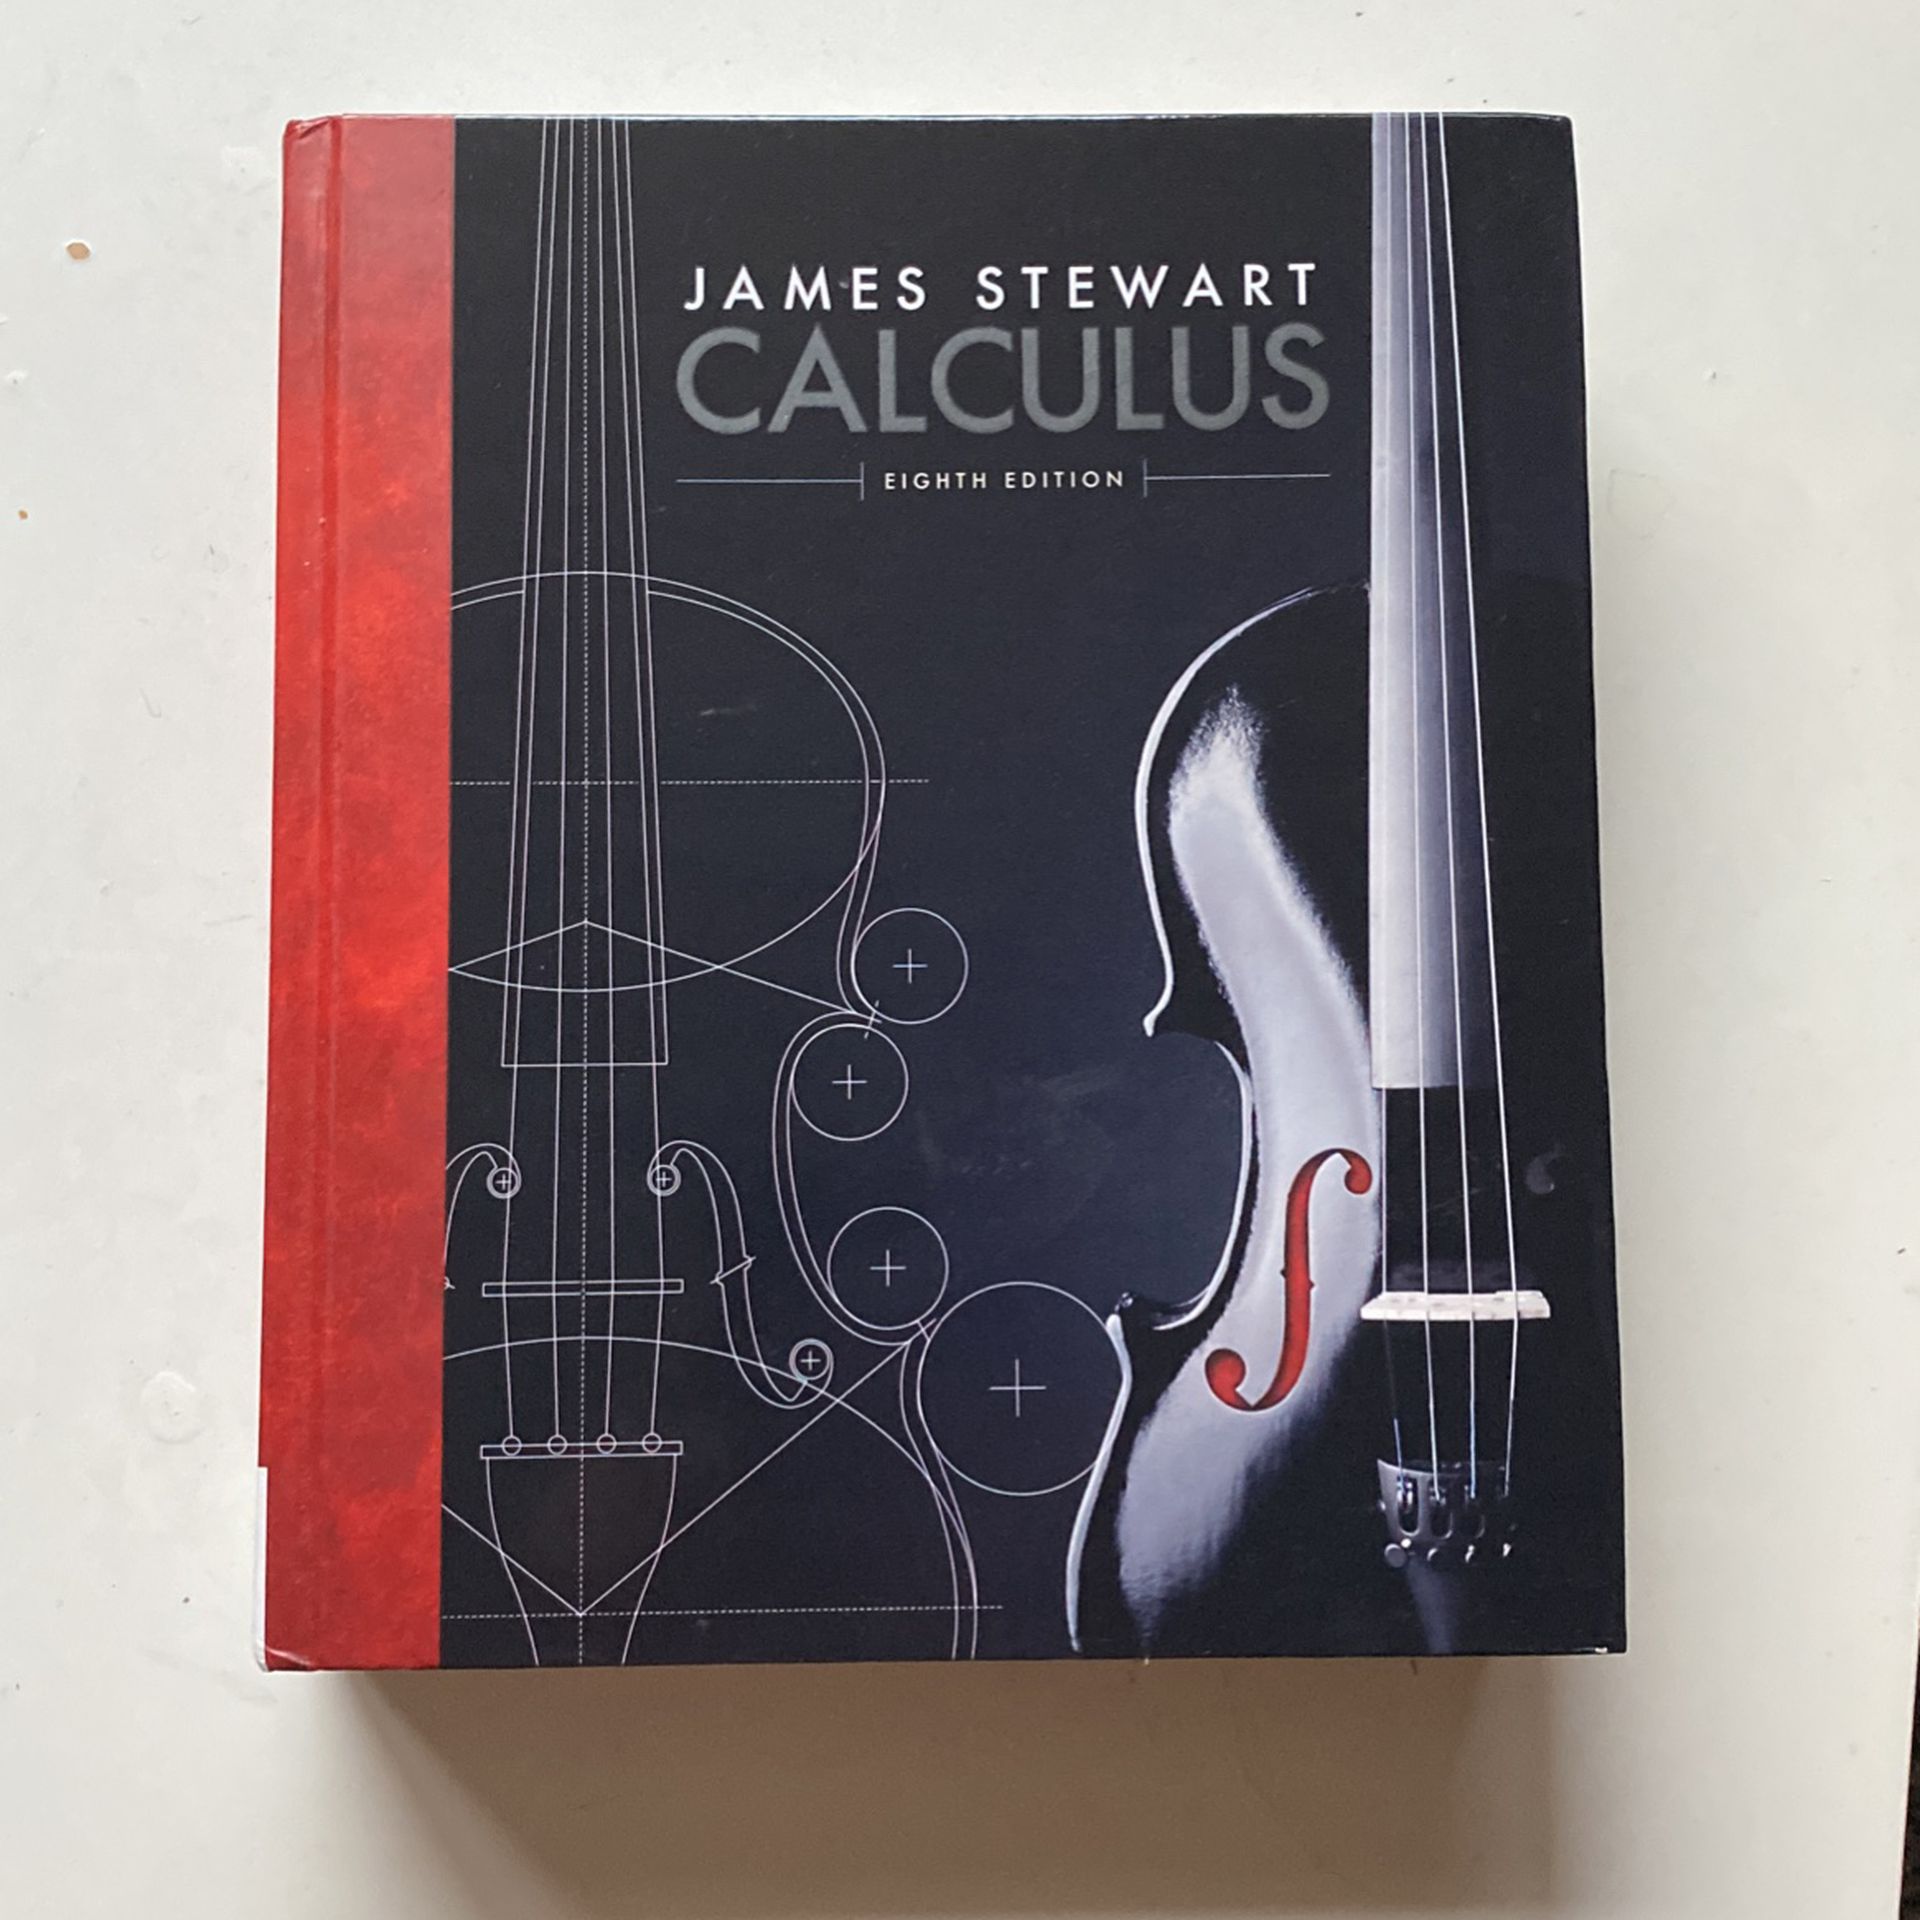 James Stewart Calculus 8th Edition